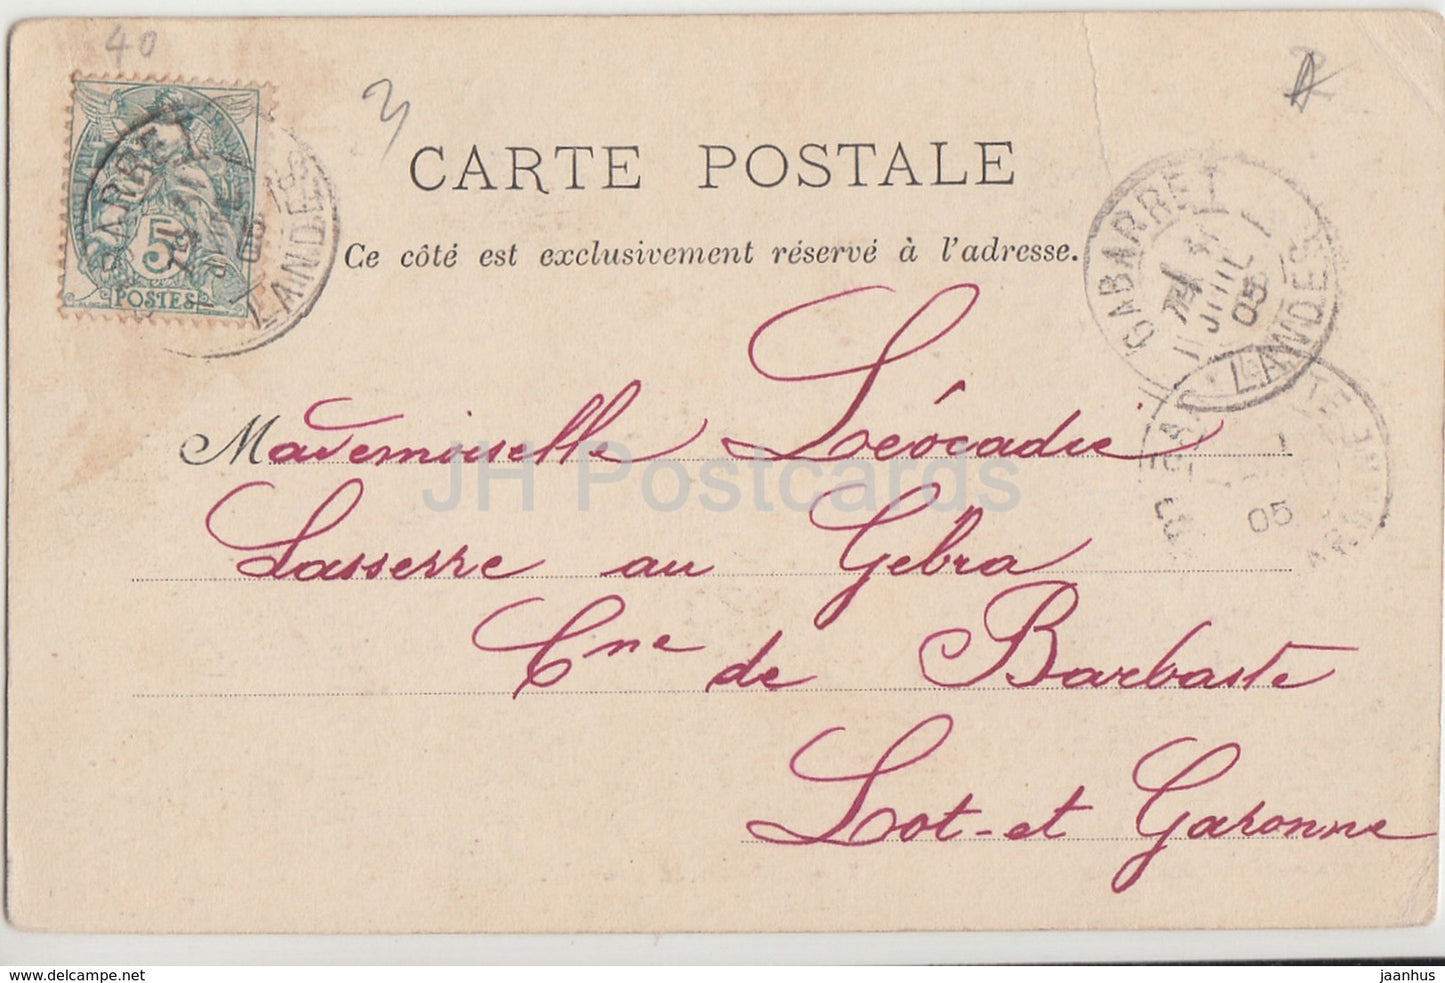 Chateau de Bournac - Schloss - 7 - 1905 - alte Postkarte - Frankreich - gebraucht